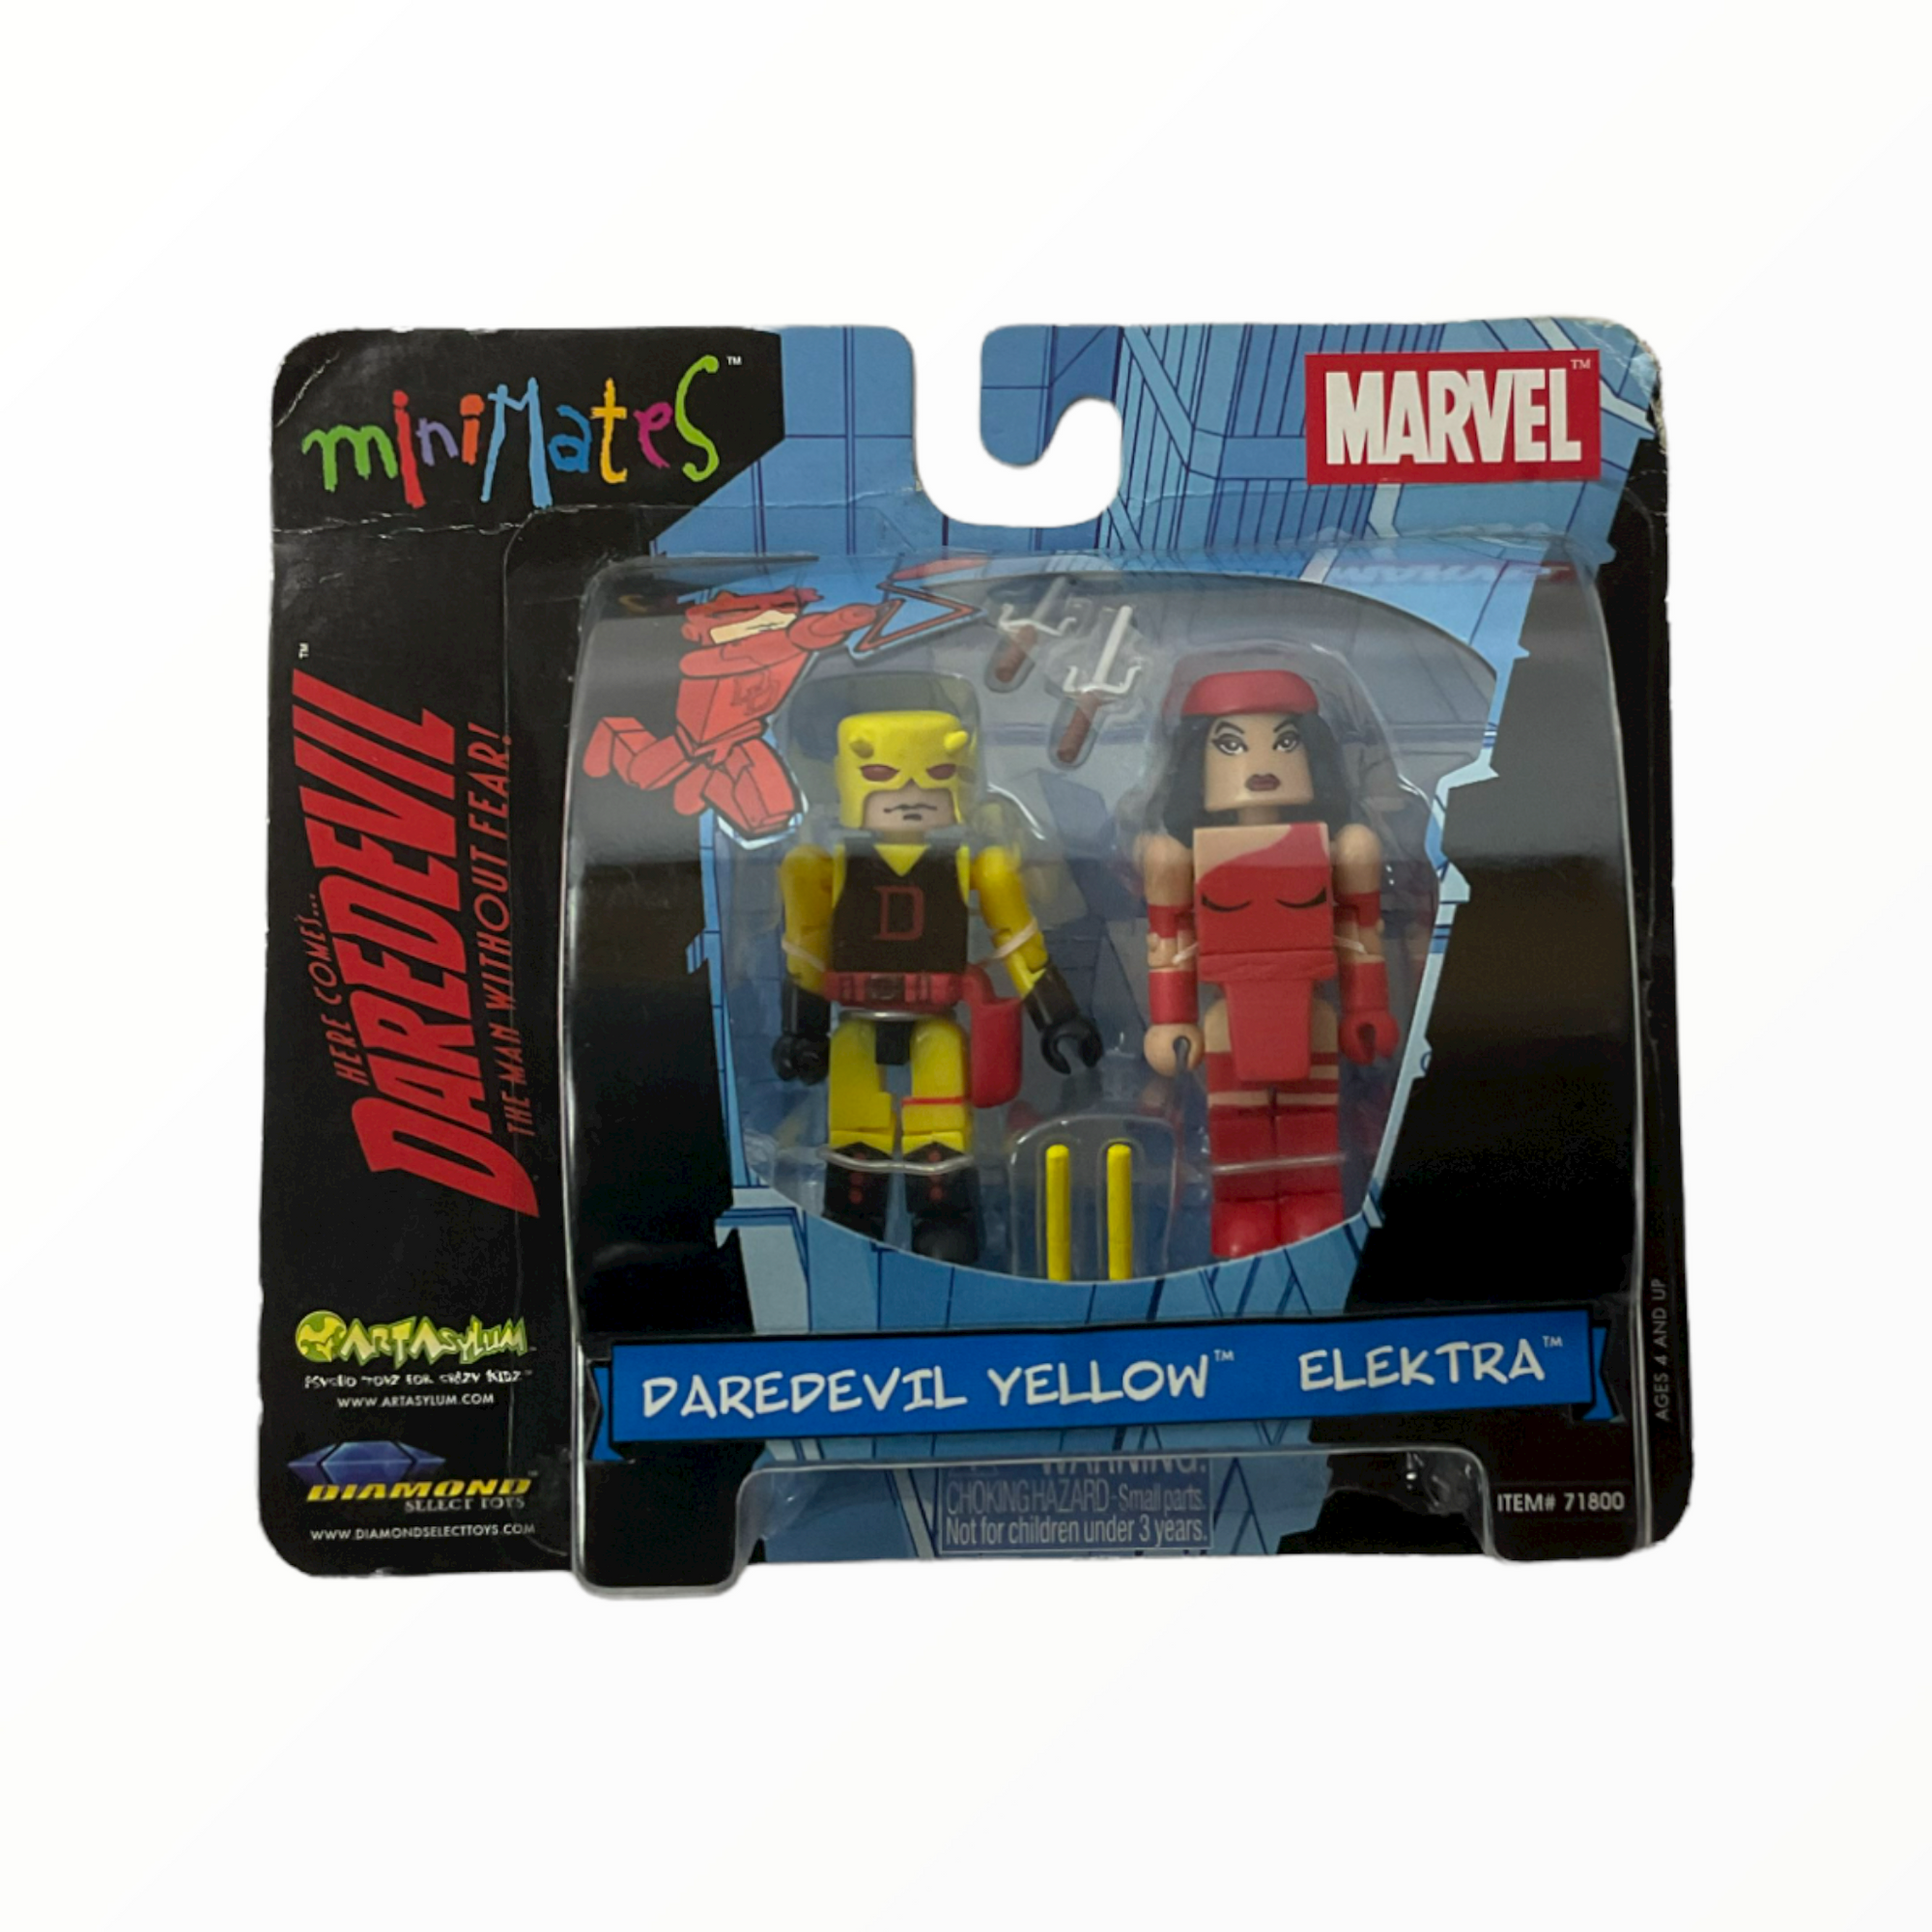 Mimimates Daredevil Yellow & Elektra